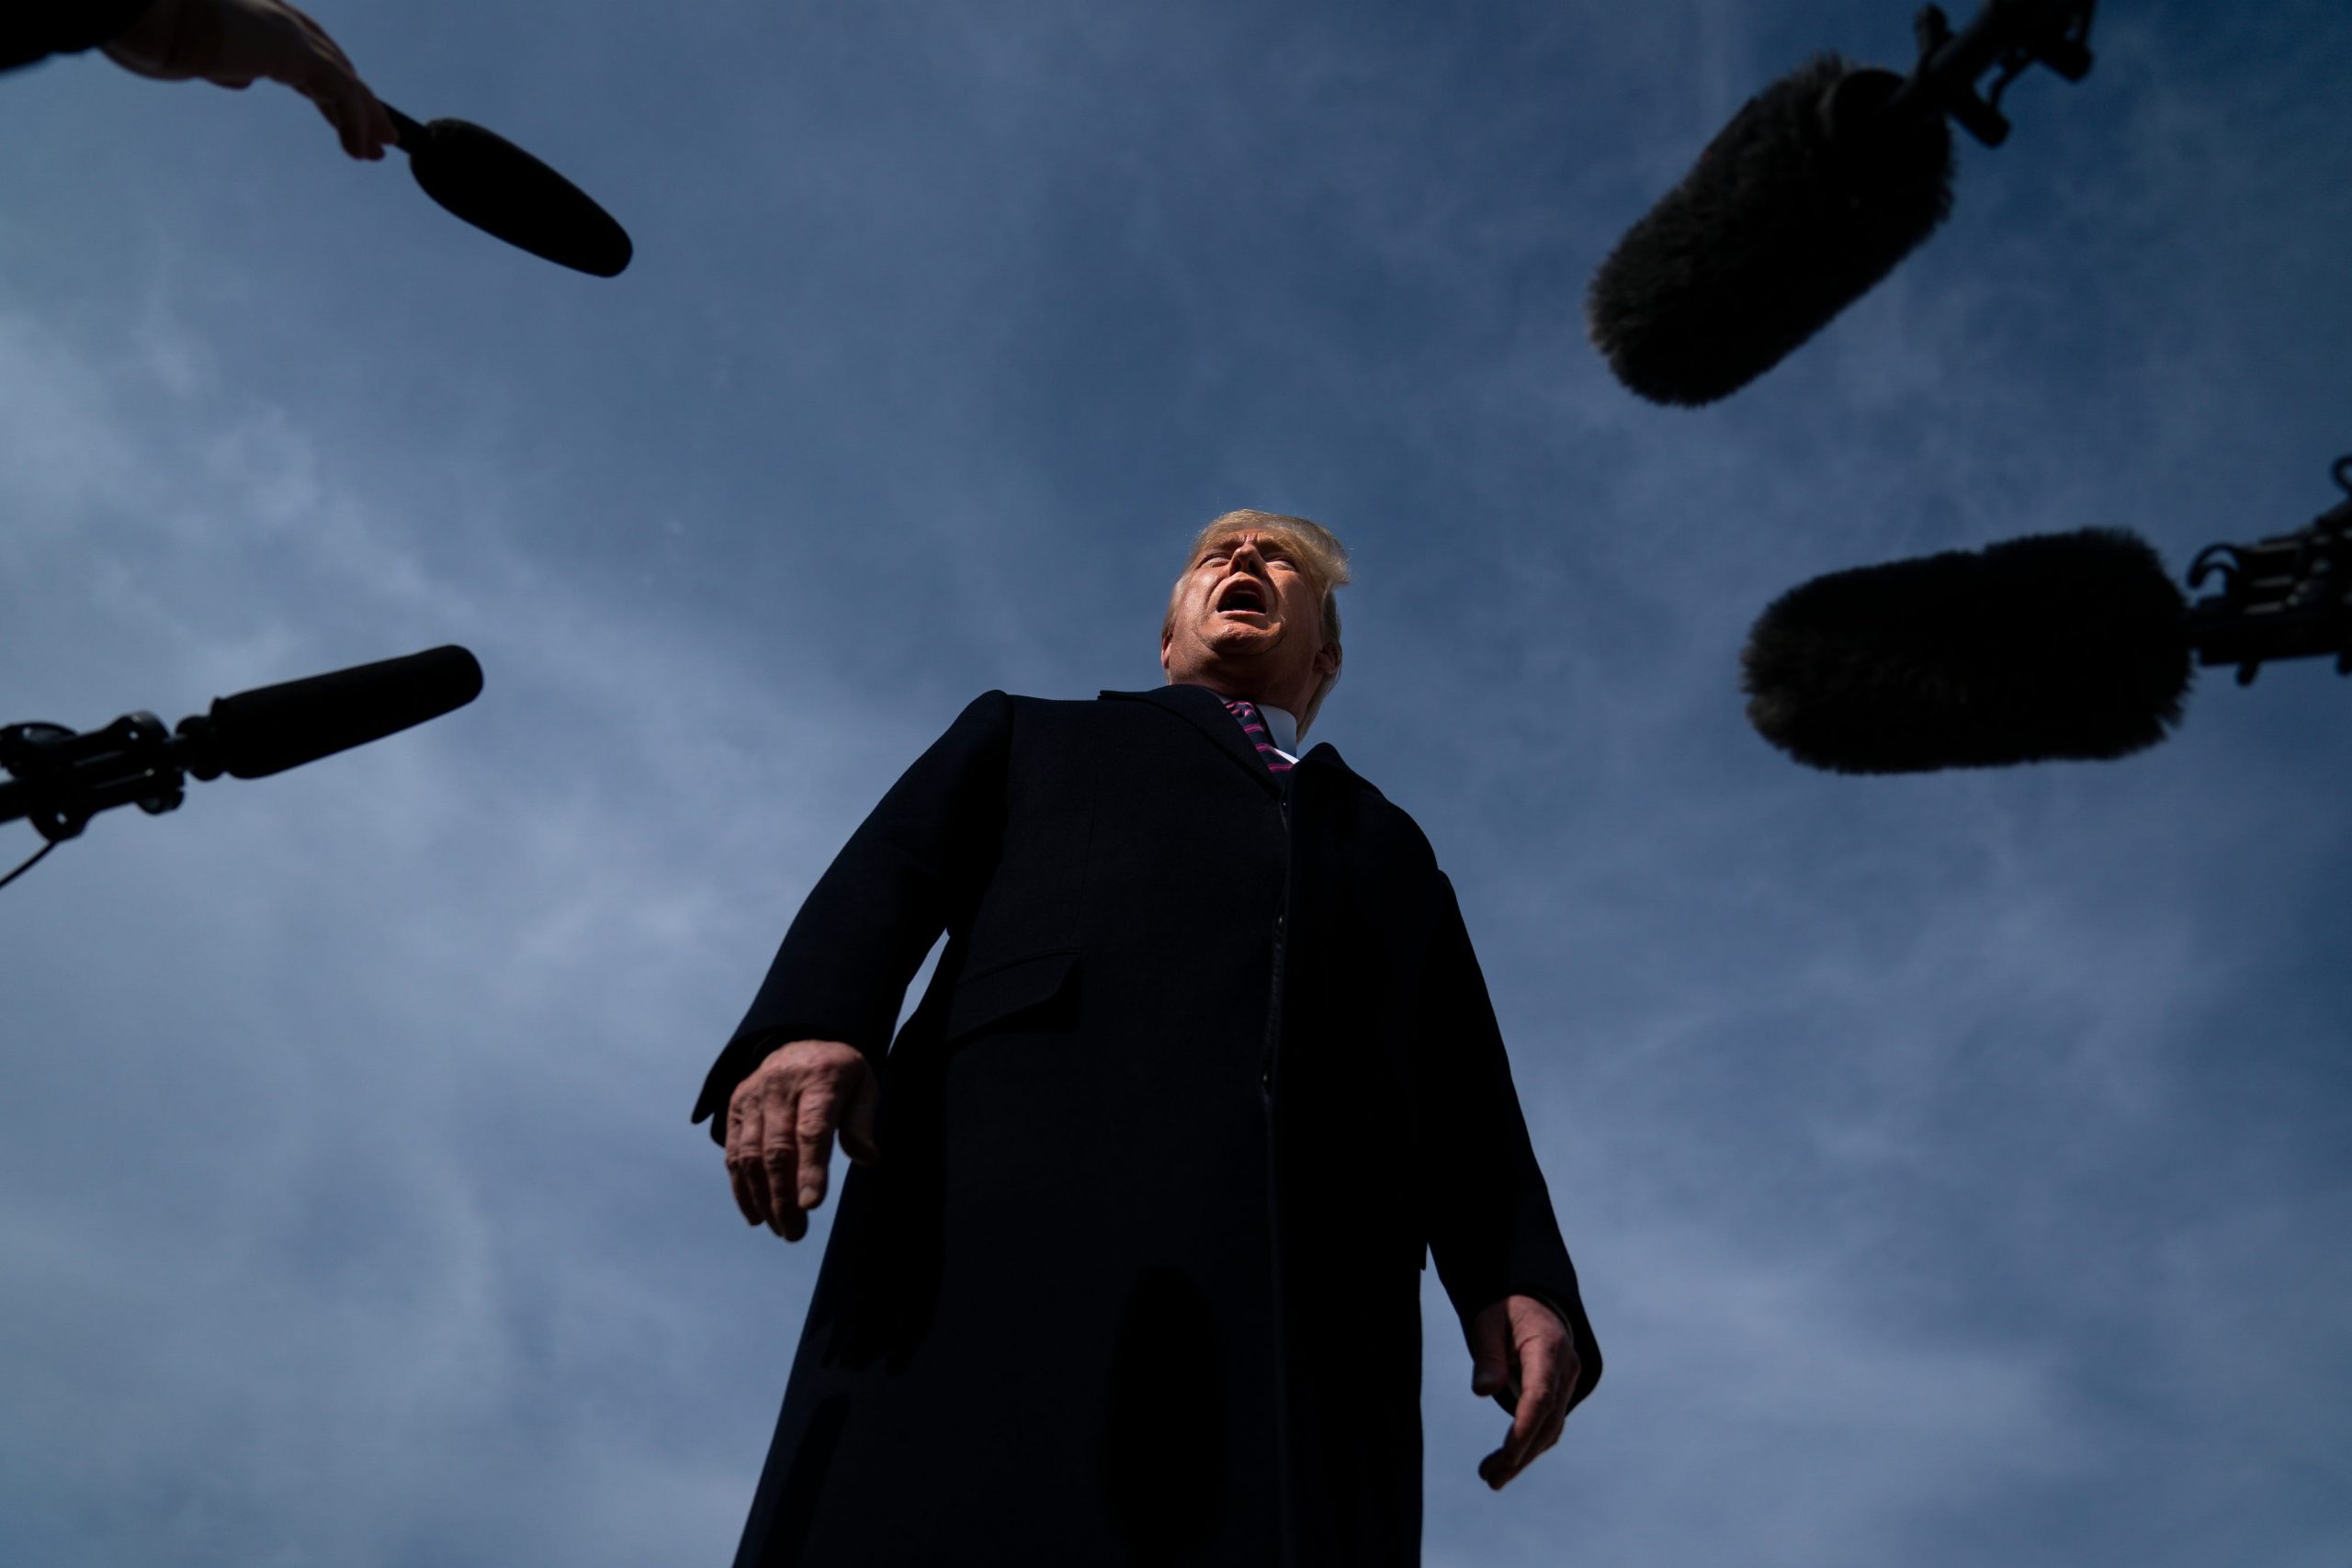 Former President Donald Trump in a black coat speaks into multiple microphones